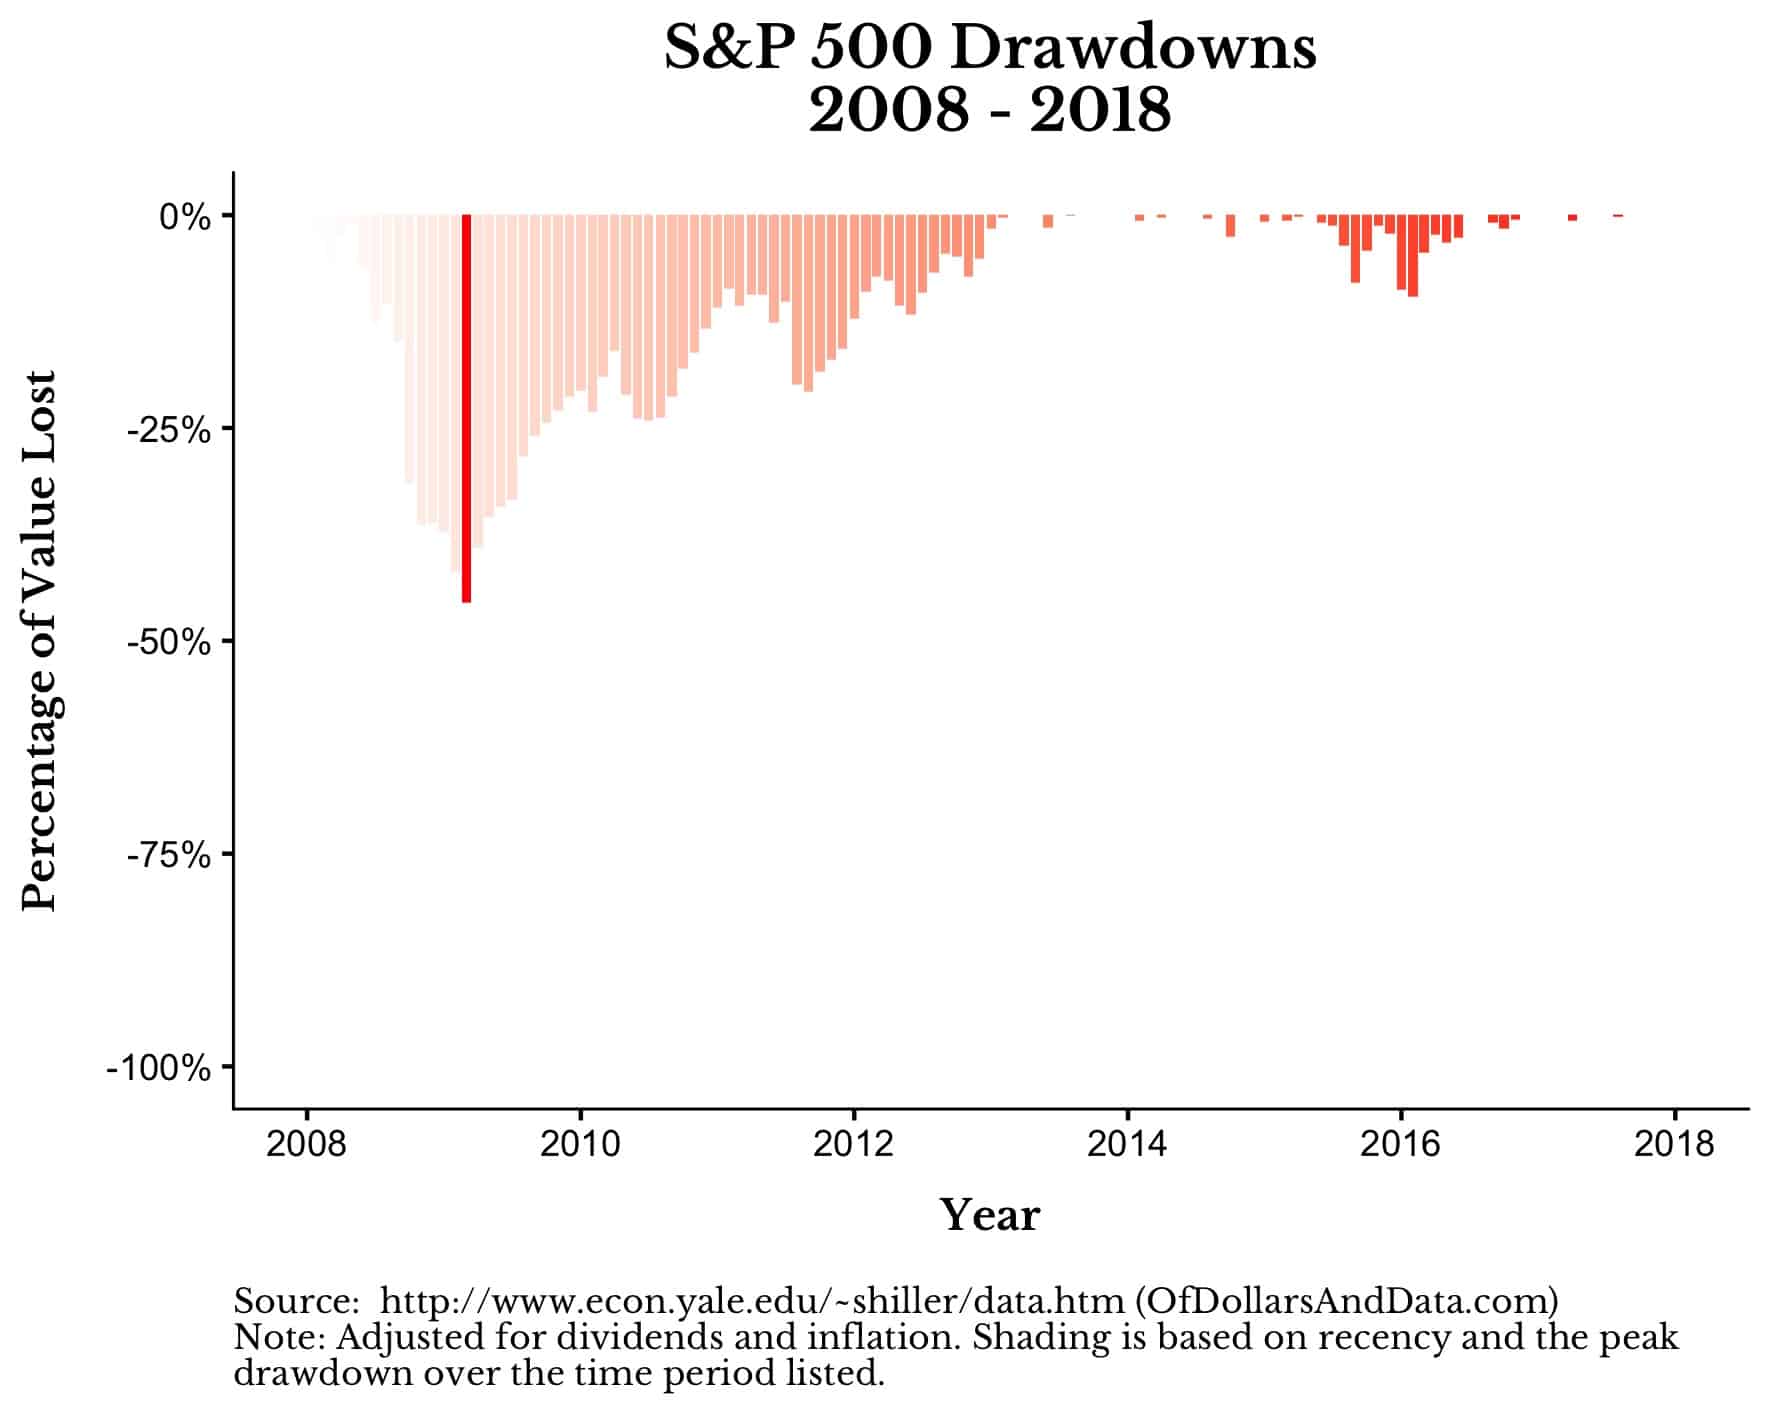 S&P 500 drawdowns 2008-2018